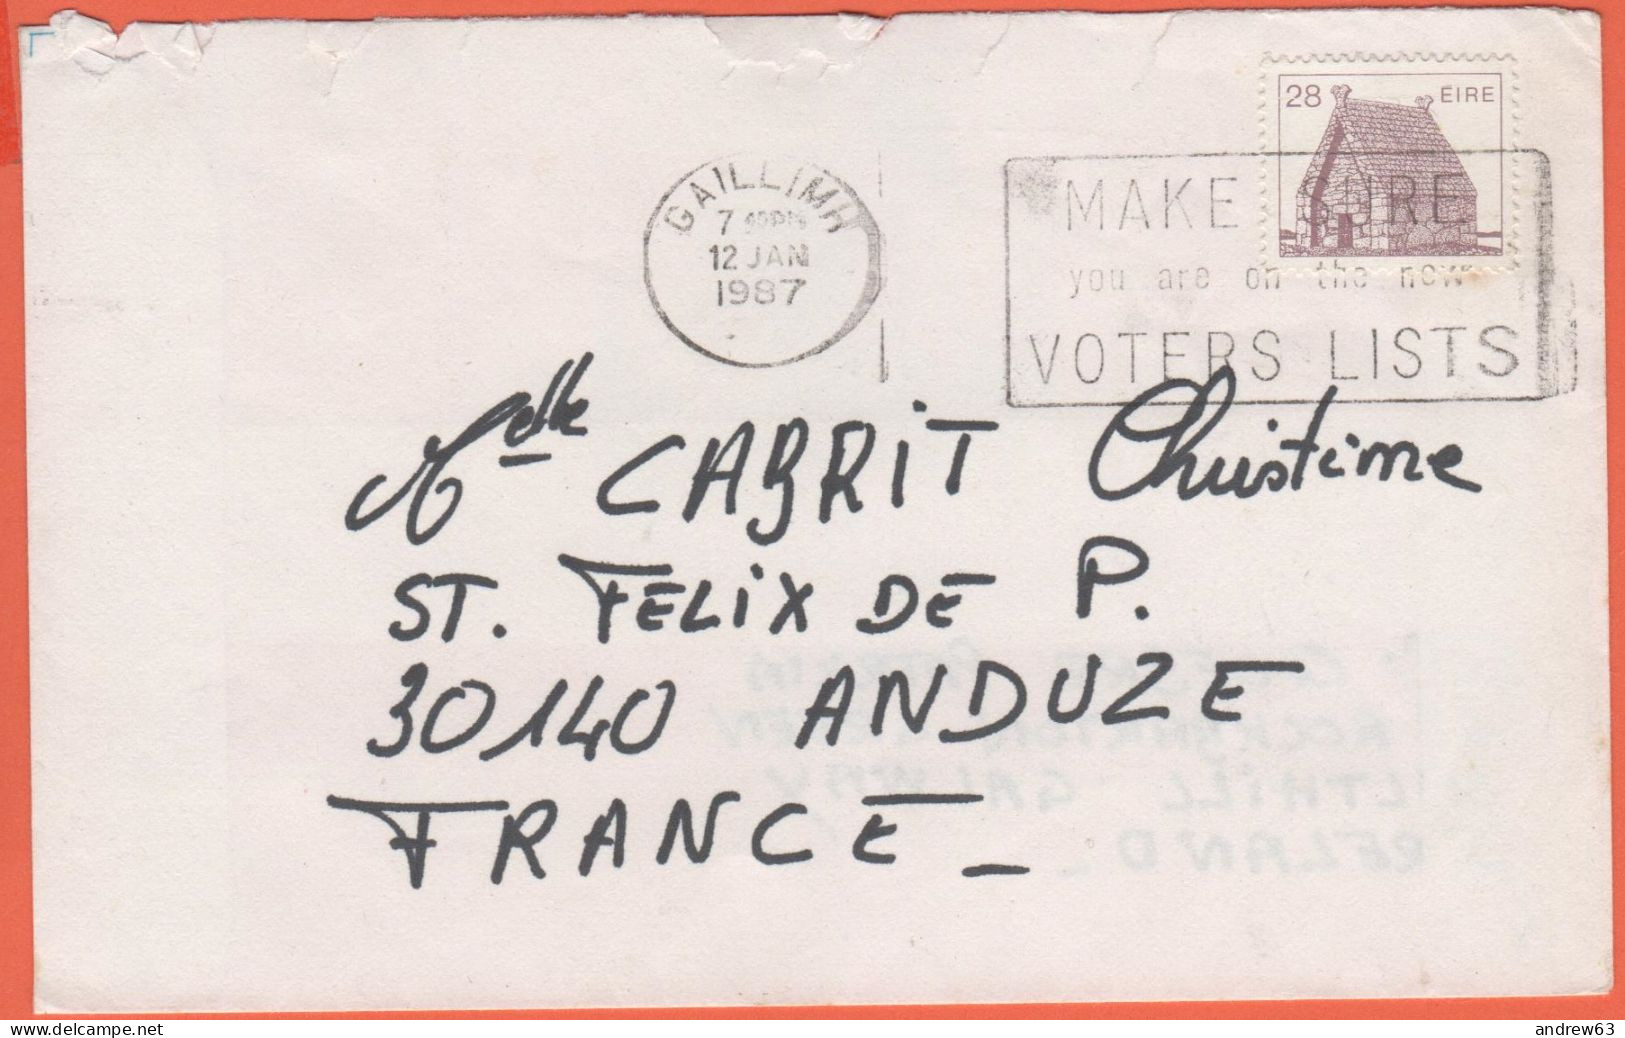 IRLANDA - IRELAND - Irlande - EIRE - 1987 - 28 - Viaggiata Da Gaillimh Per Anduze, France - Lettres & Documents